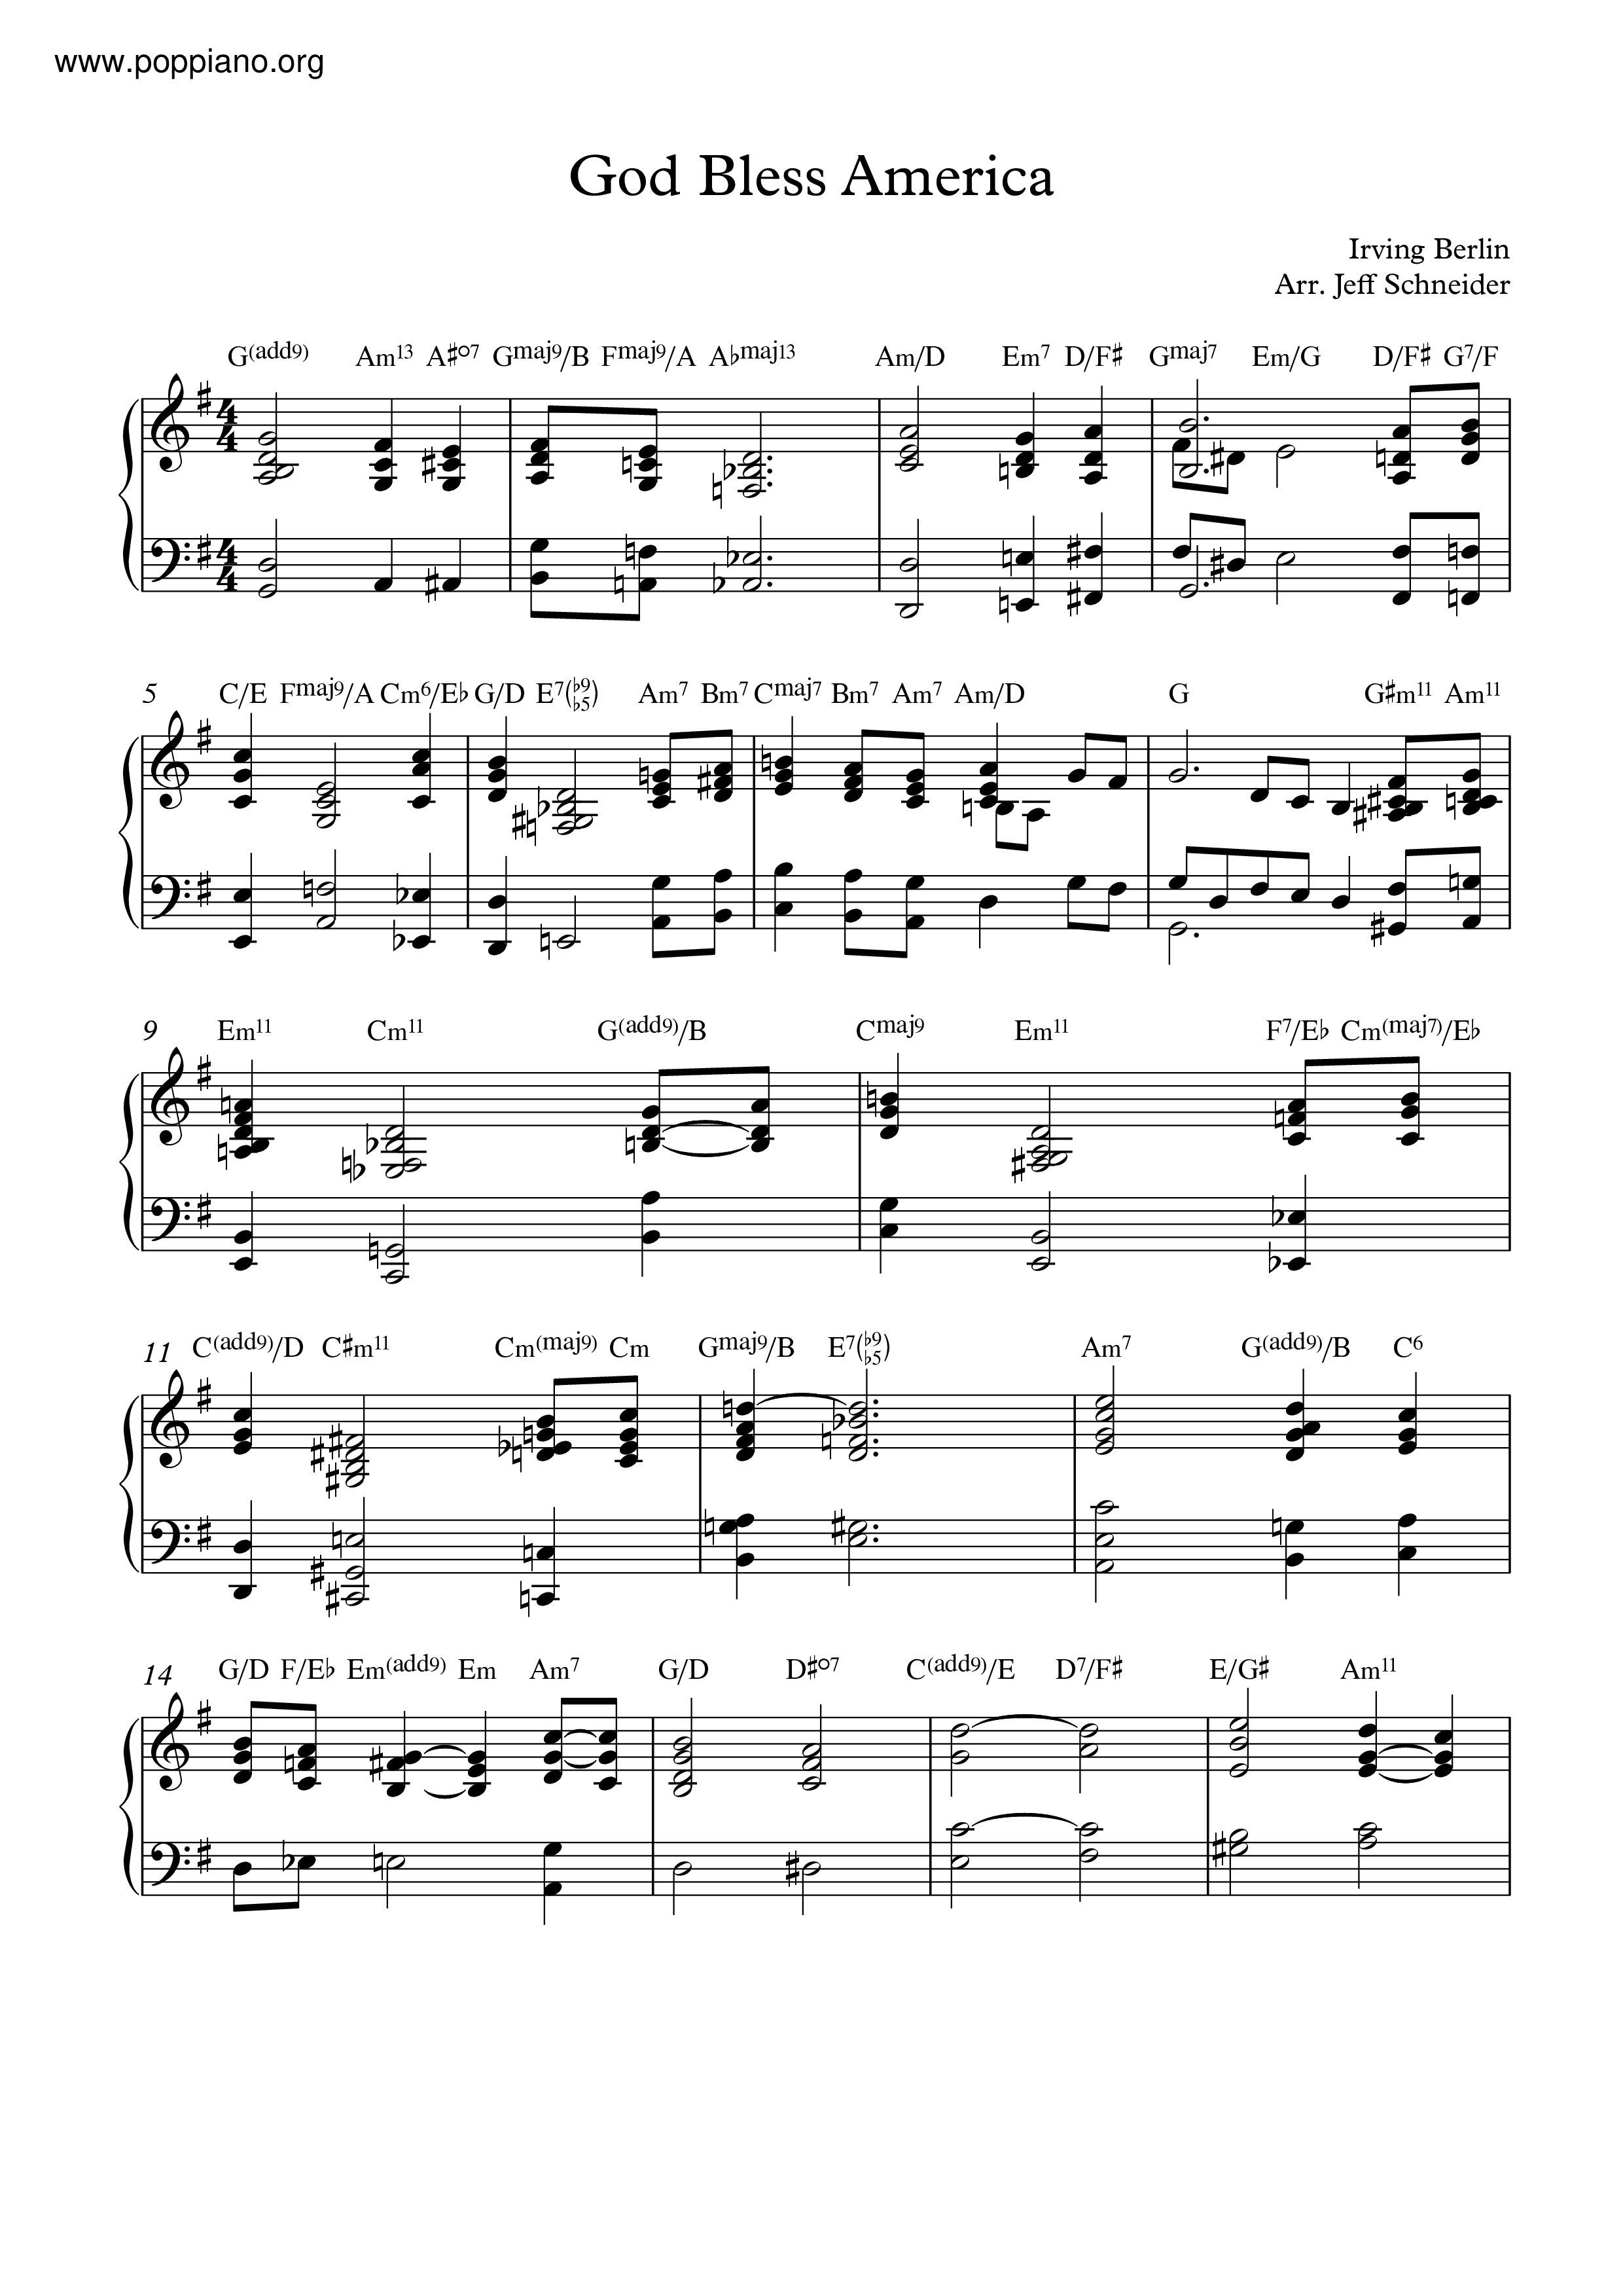  God Bless America Sheet Music Piano Score Free PDF Download HK Pop Piano Academy